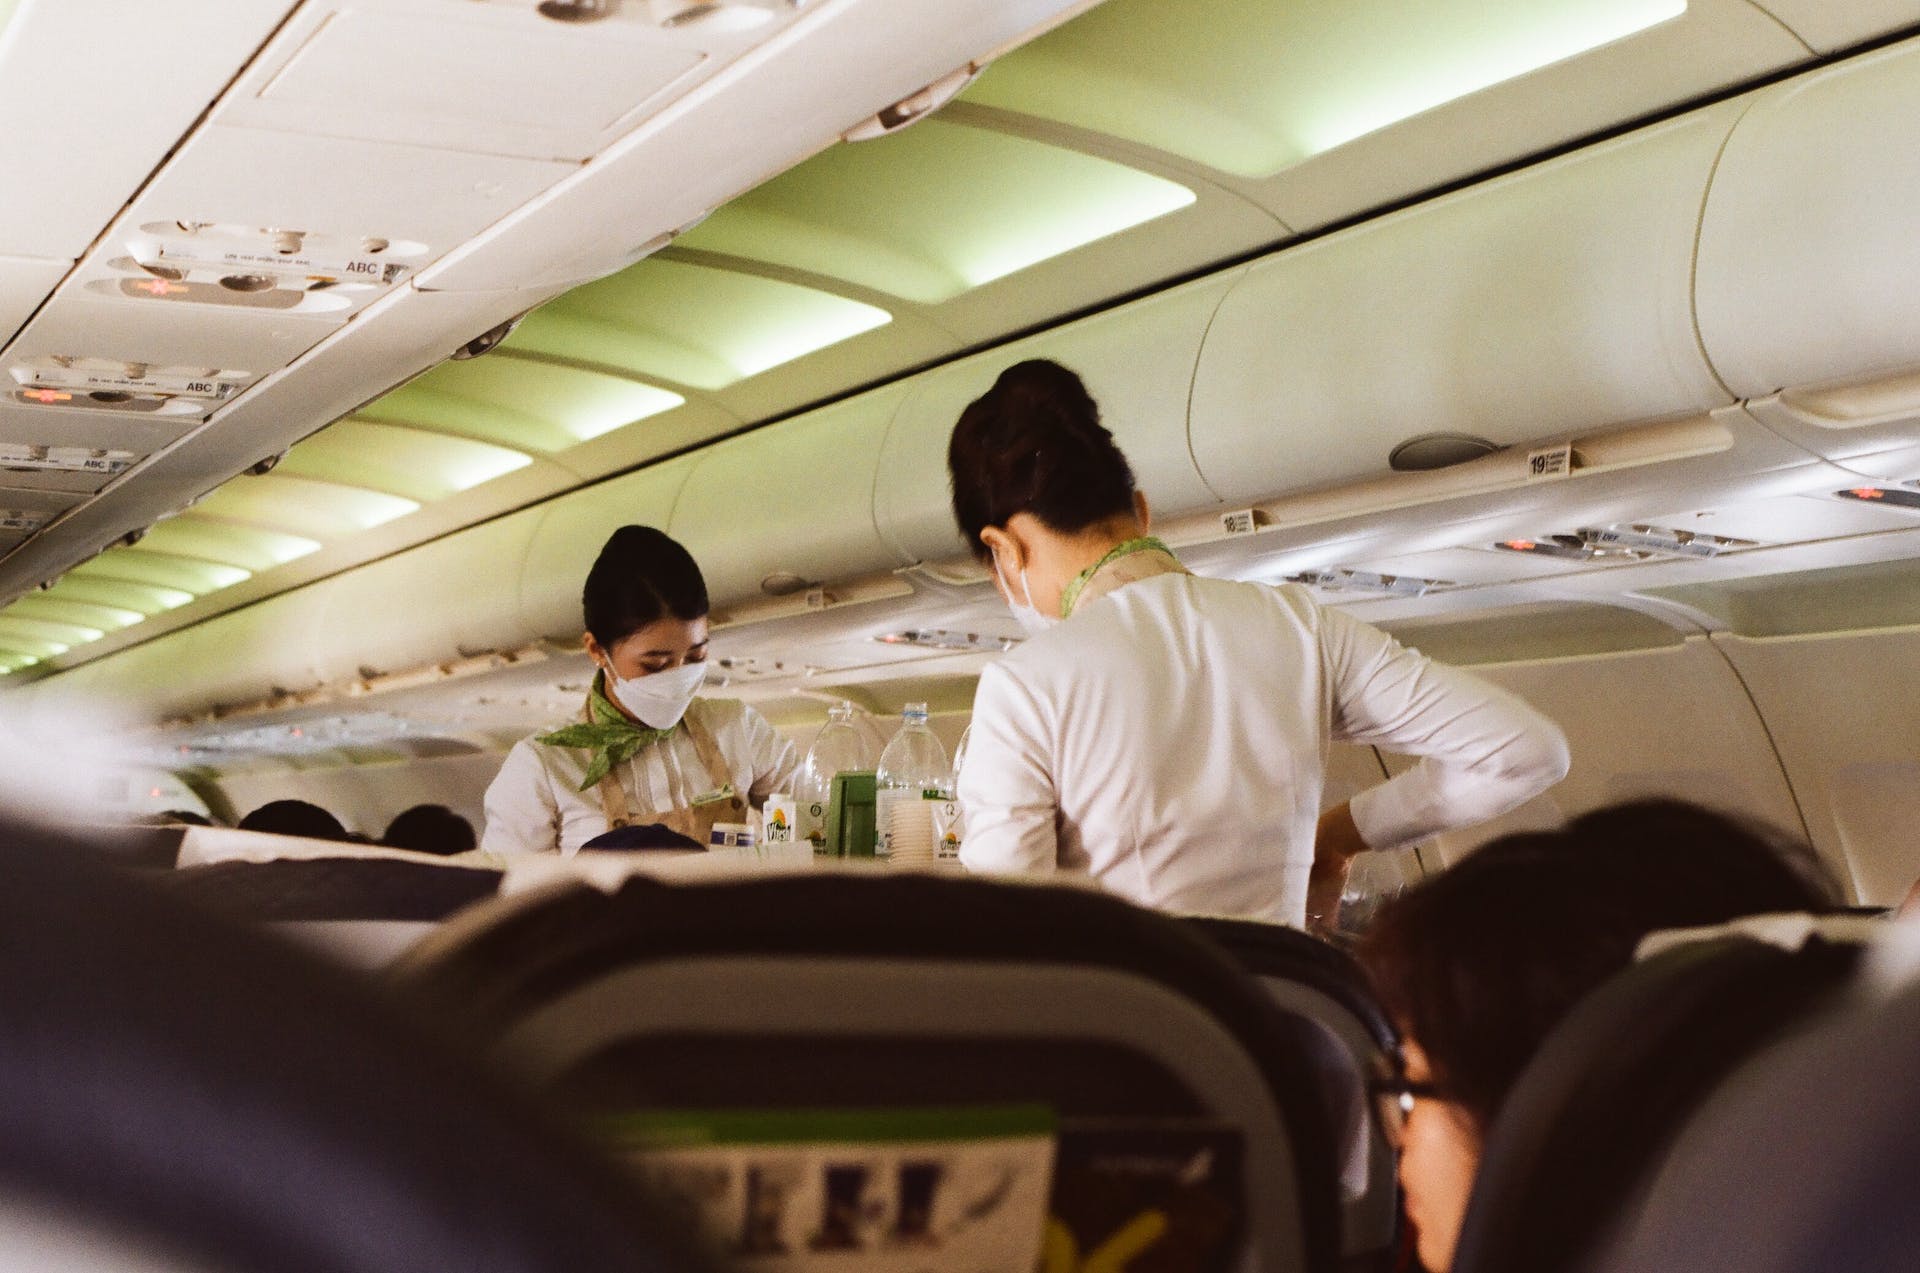 Flight attendants serving food | Source: Pexels